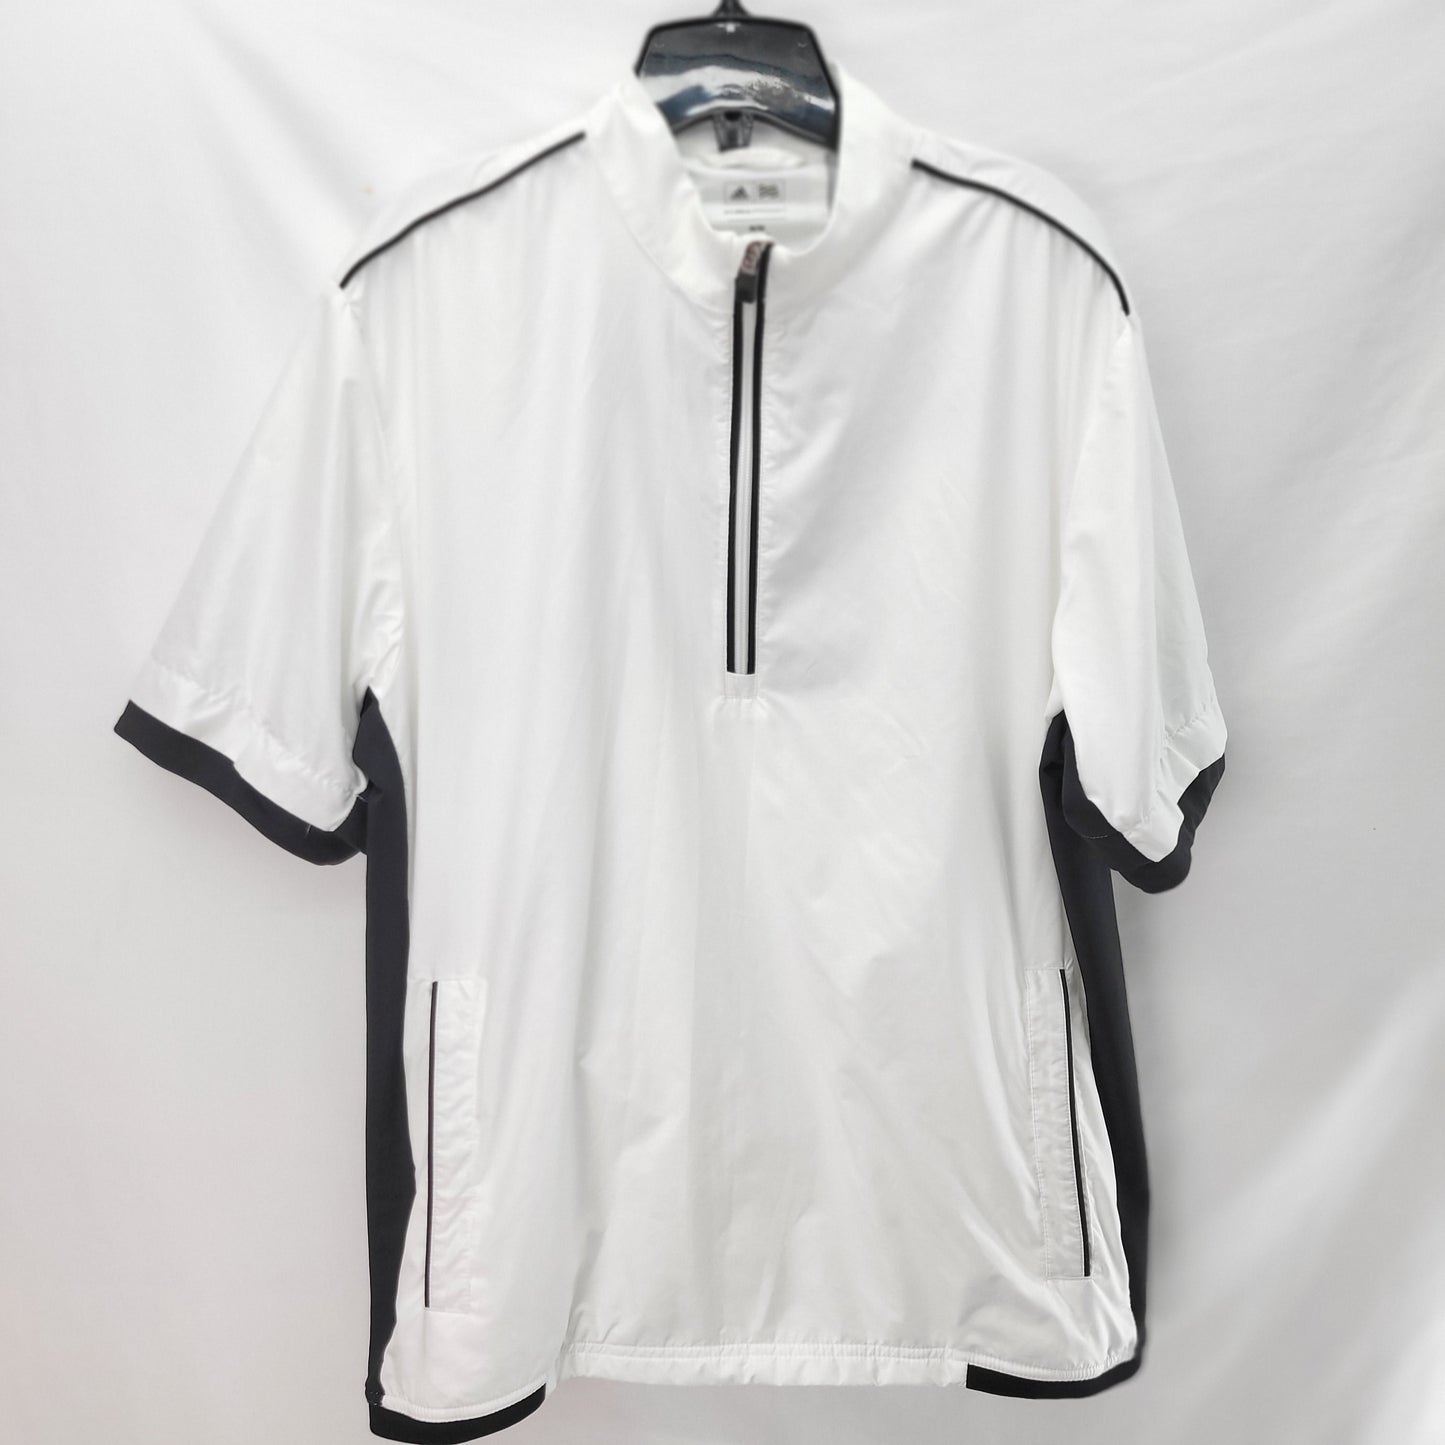 Adidas Golf Men's Quarter Zip Shirt White/Black - Medium